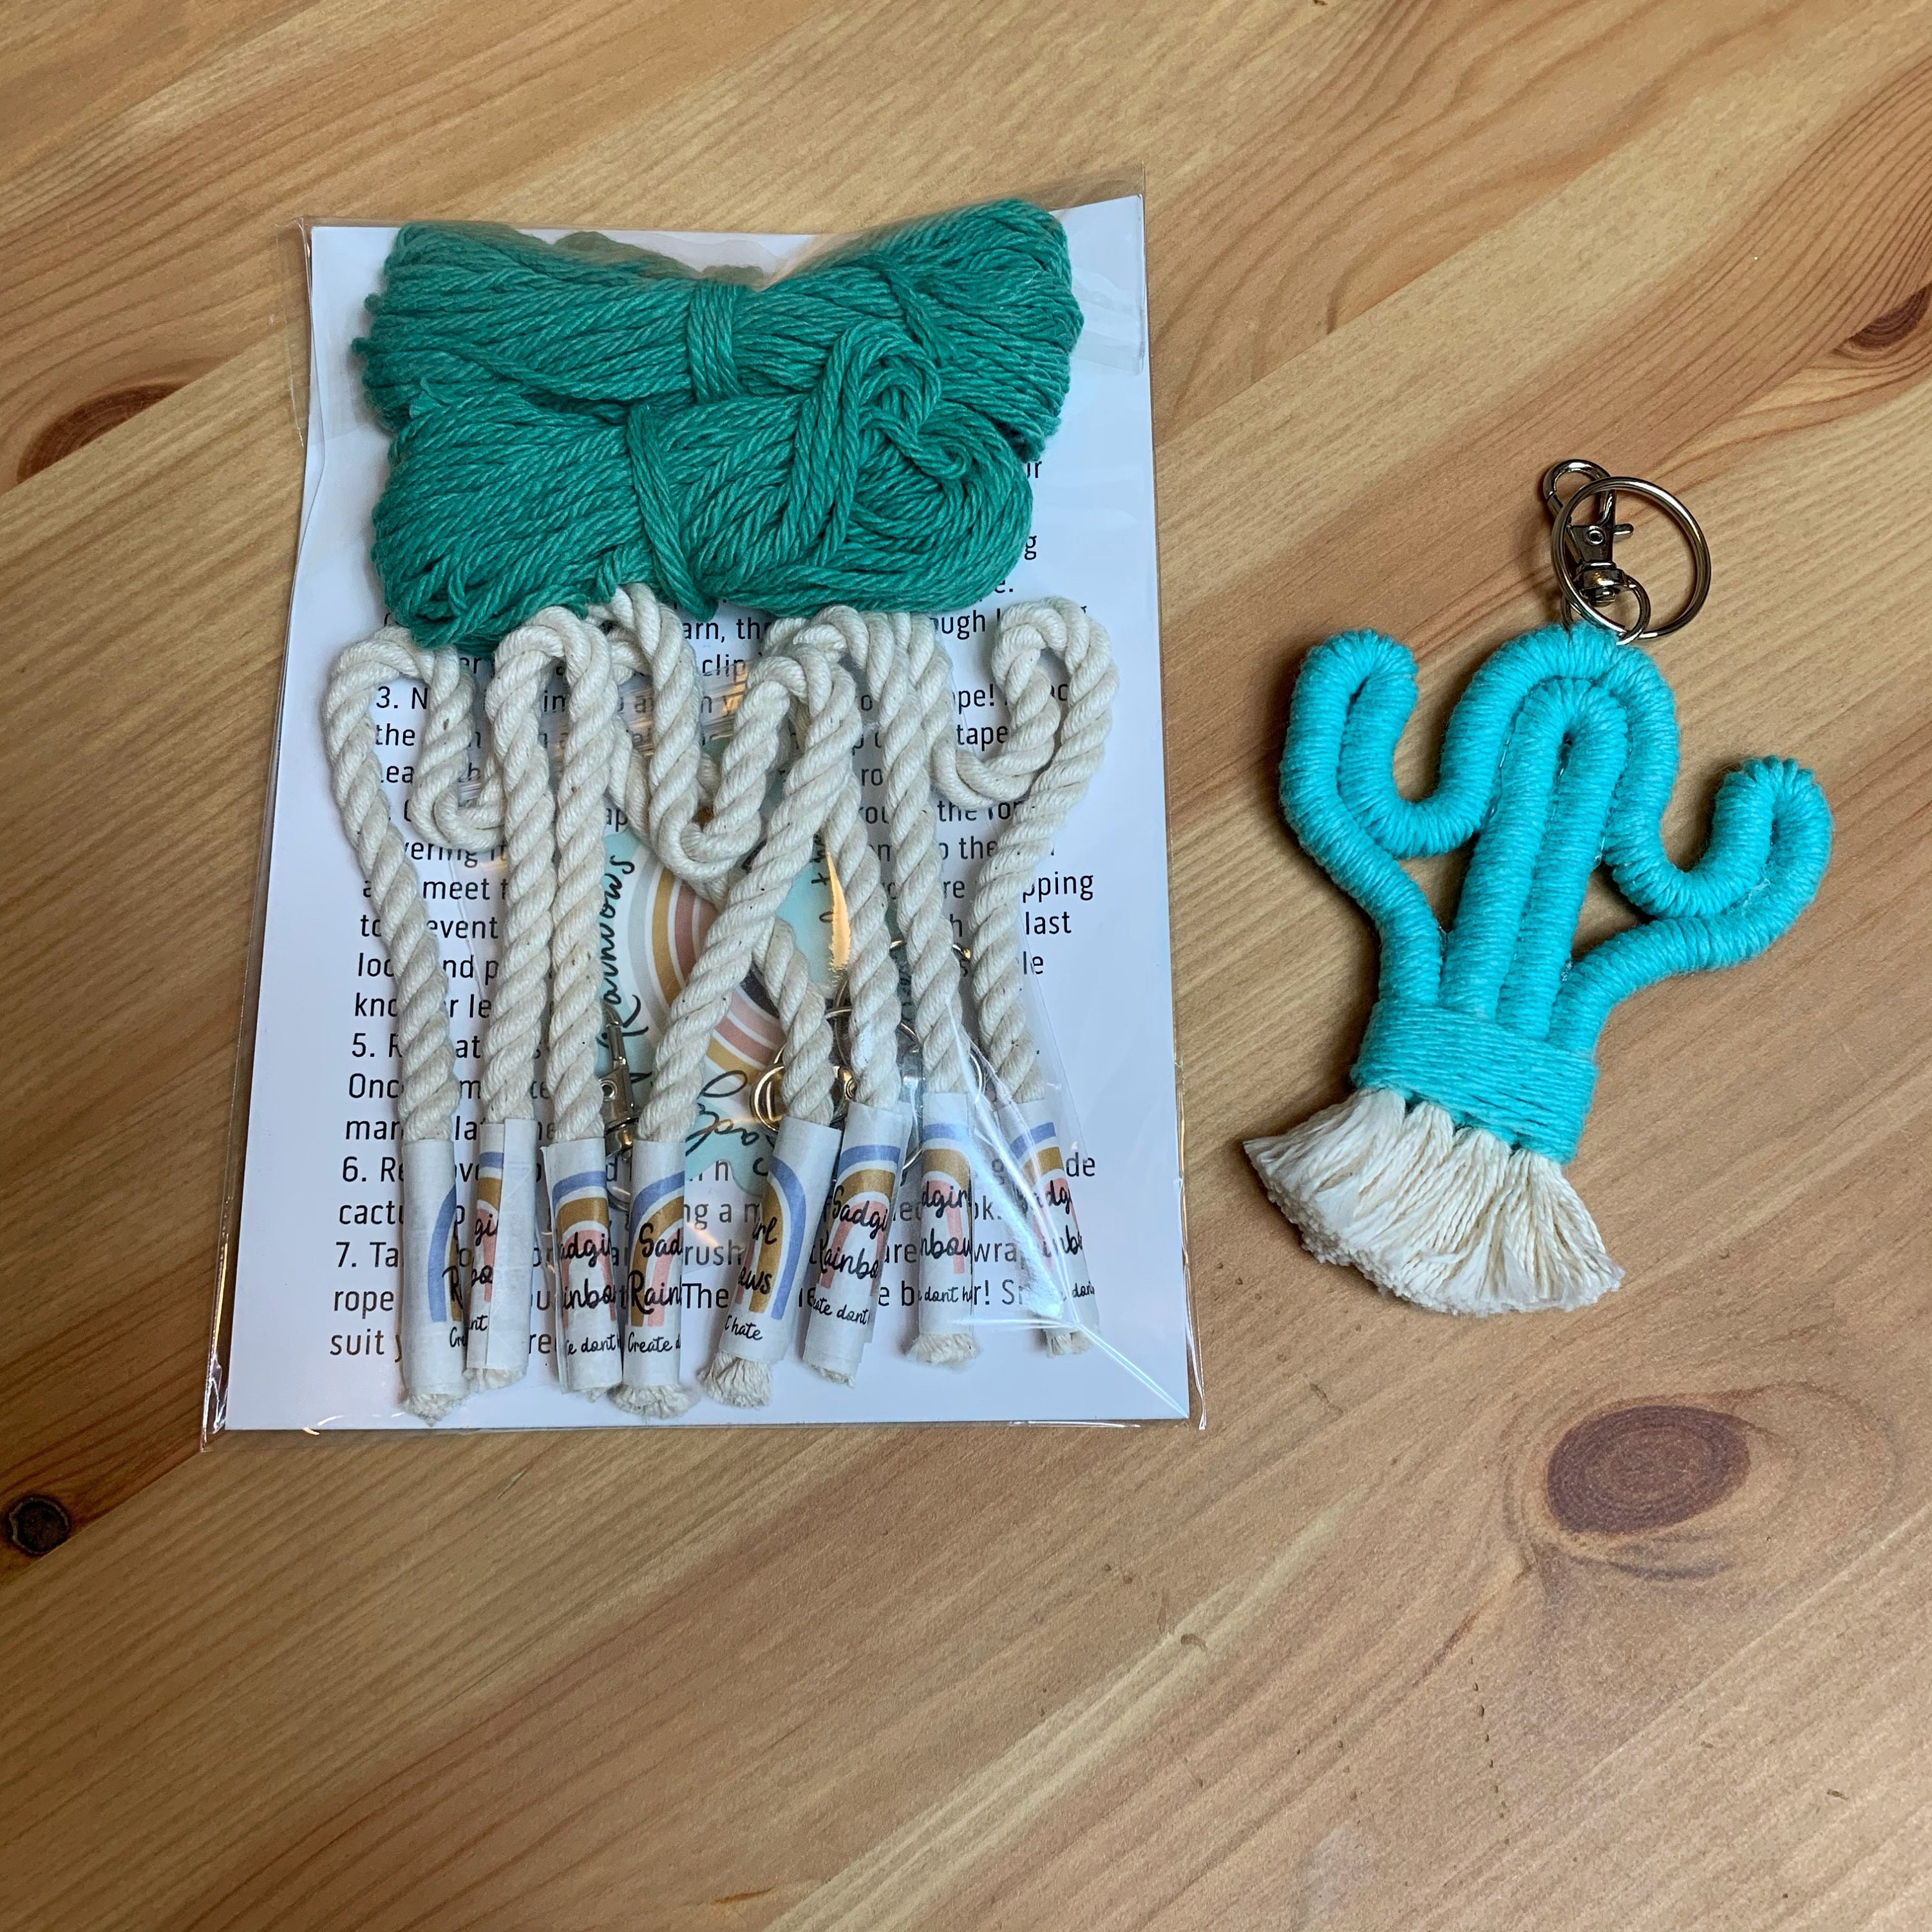 Olycraft DIY Cactus Keychain Making Kit 